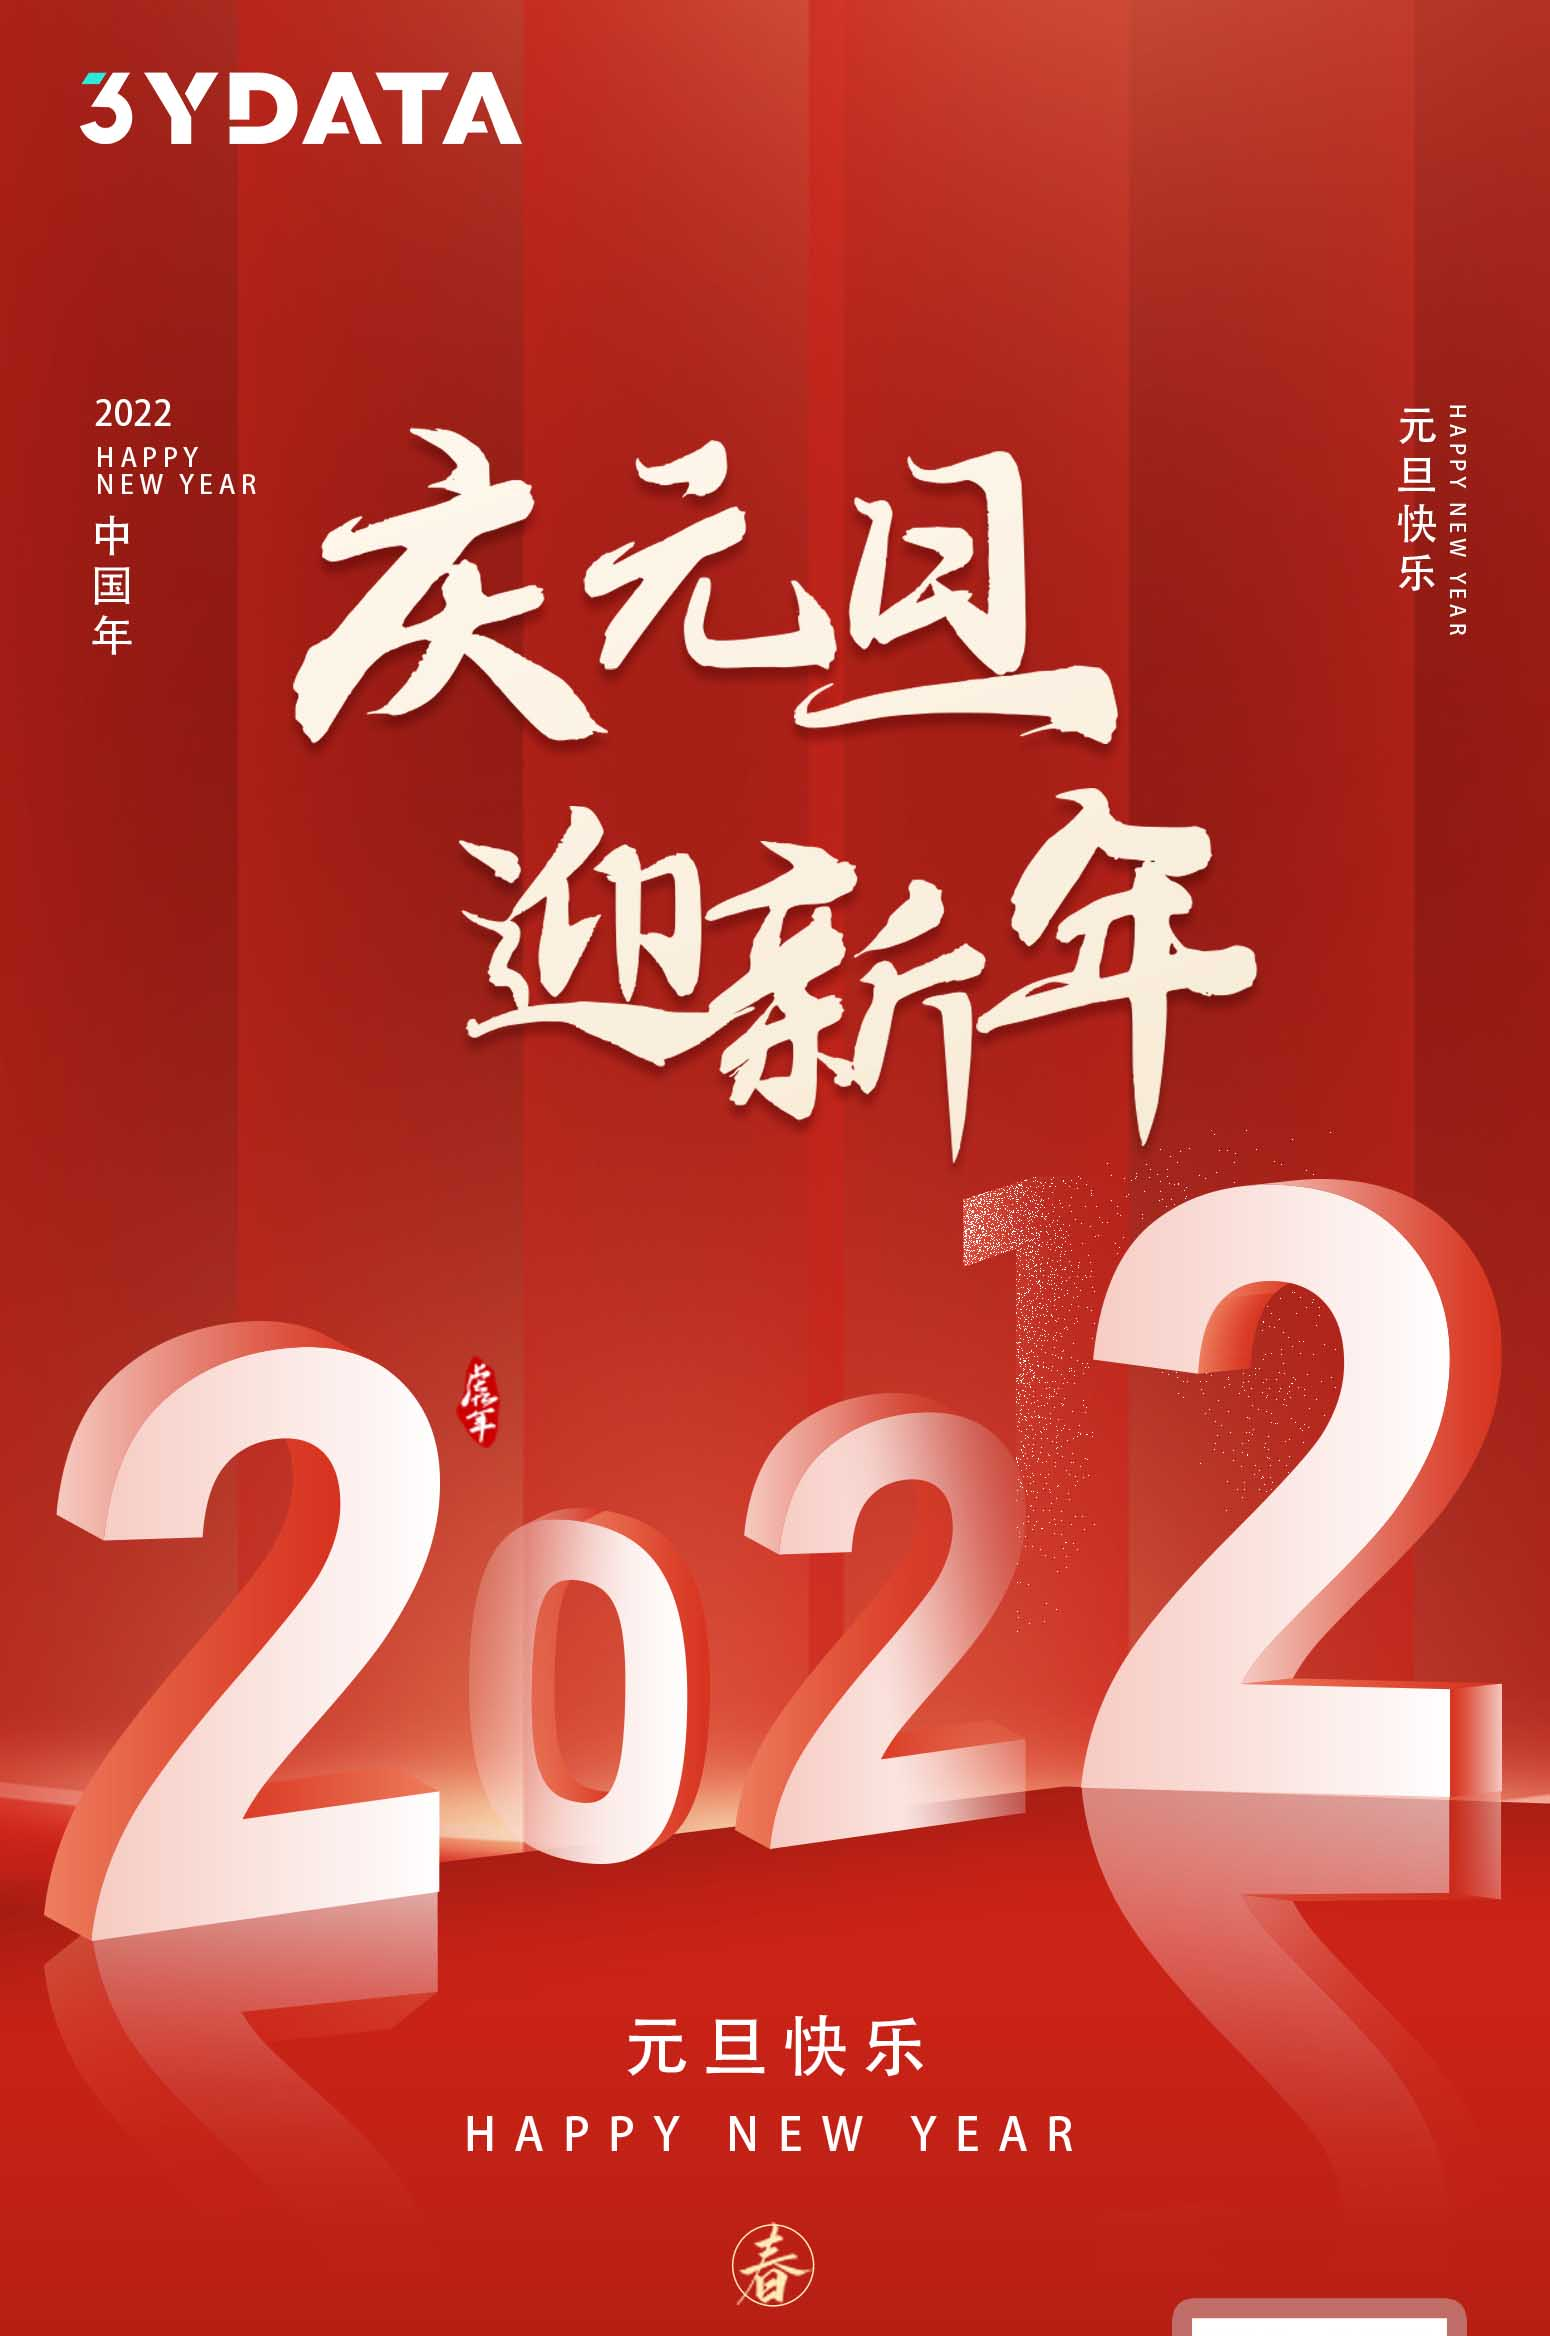 3ydata祝您新年快乐奉上2022年全年营销日历